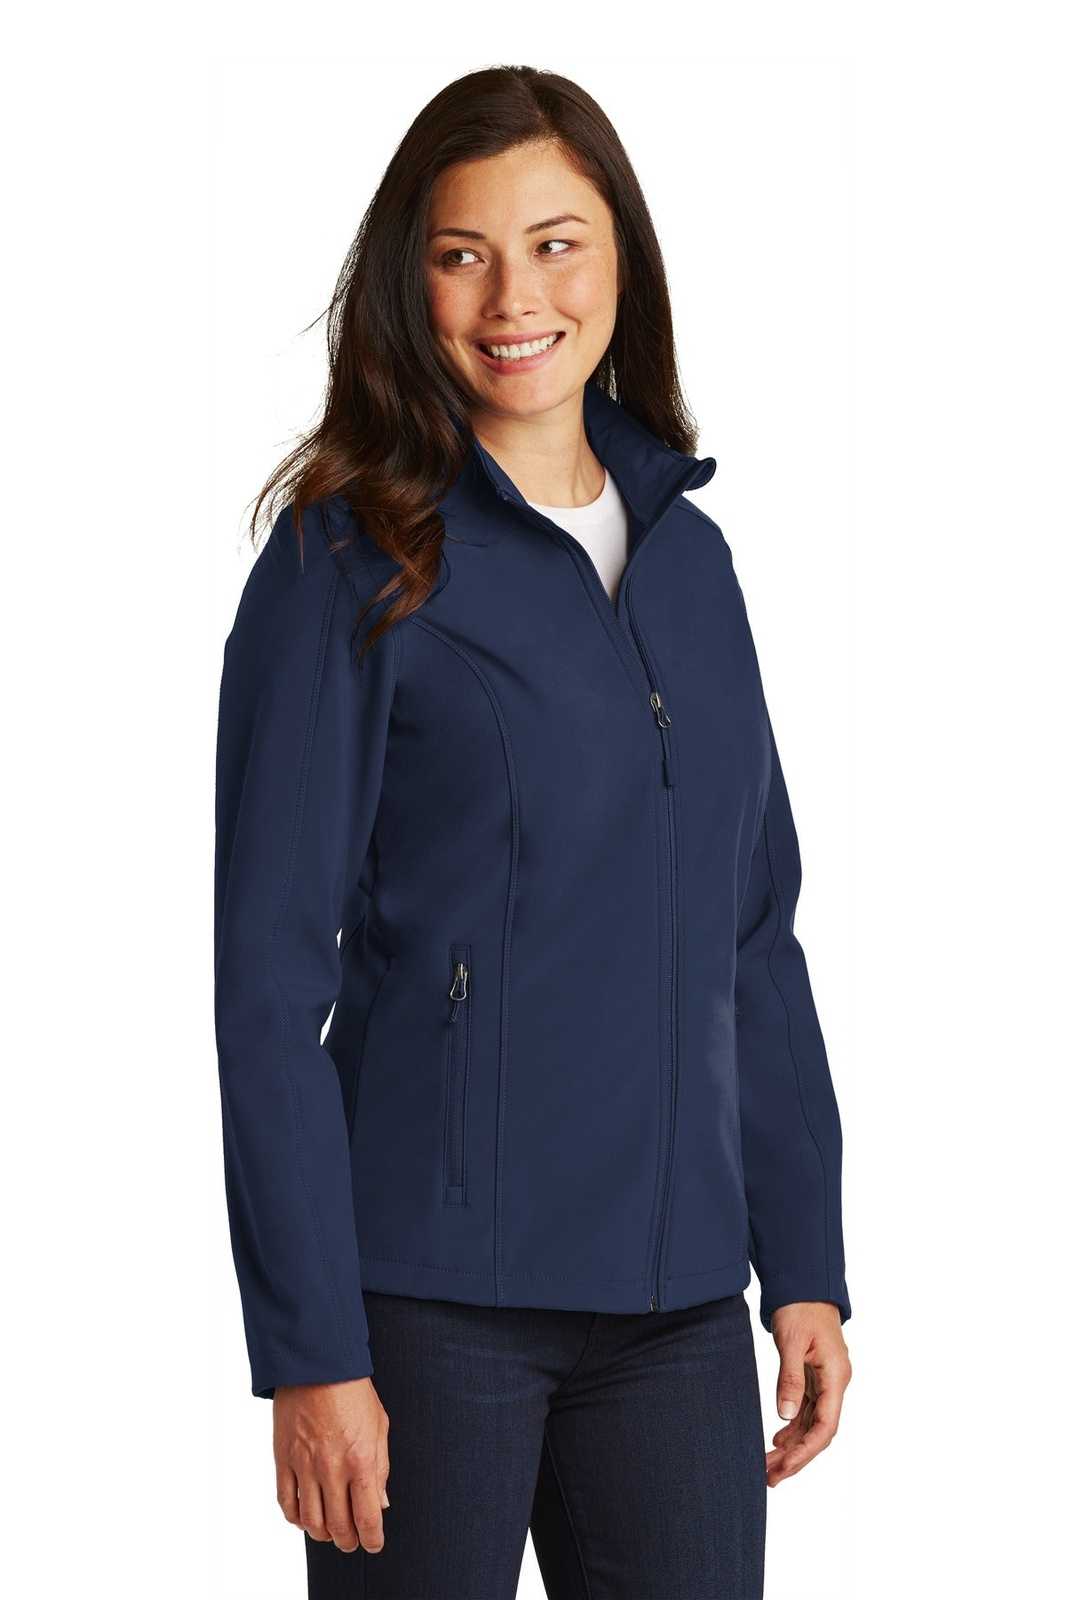 Port Authority L317 Ladies Core Soft Shell Jacket - Dress Blue Navy - HIT a Double - 4